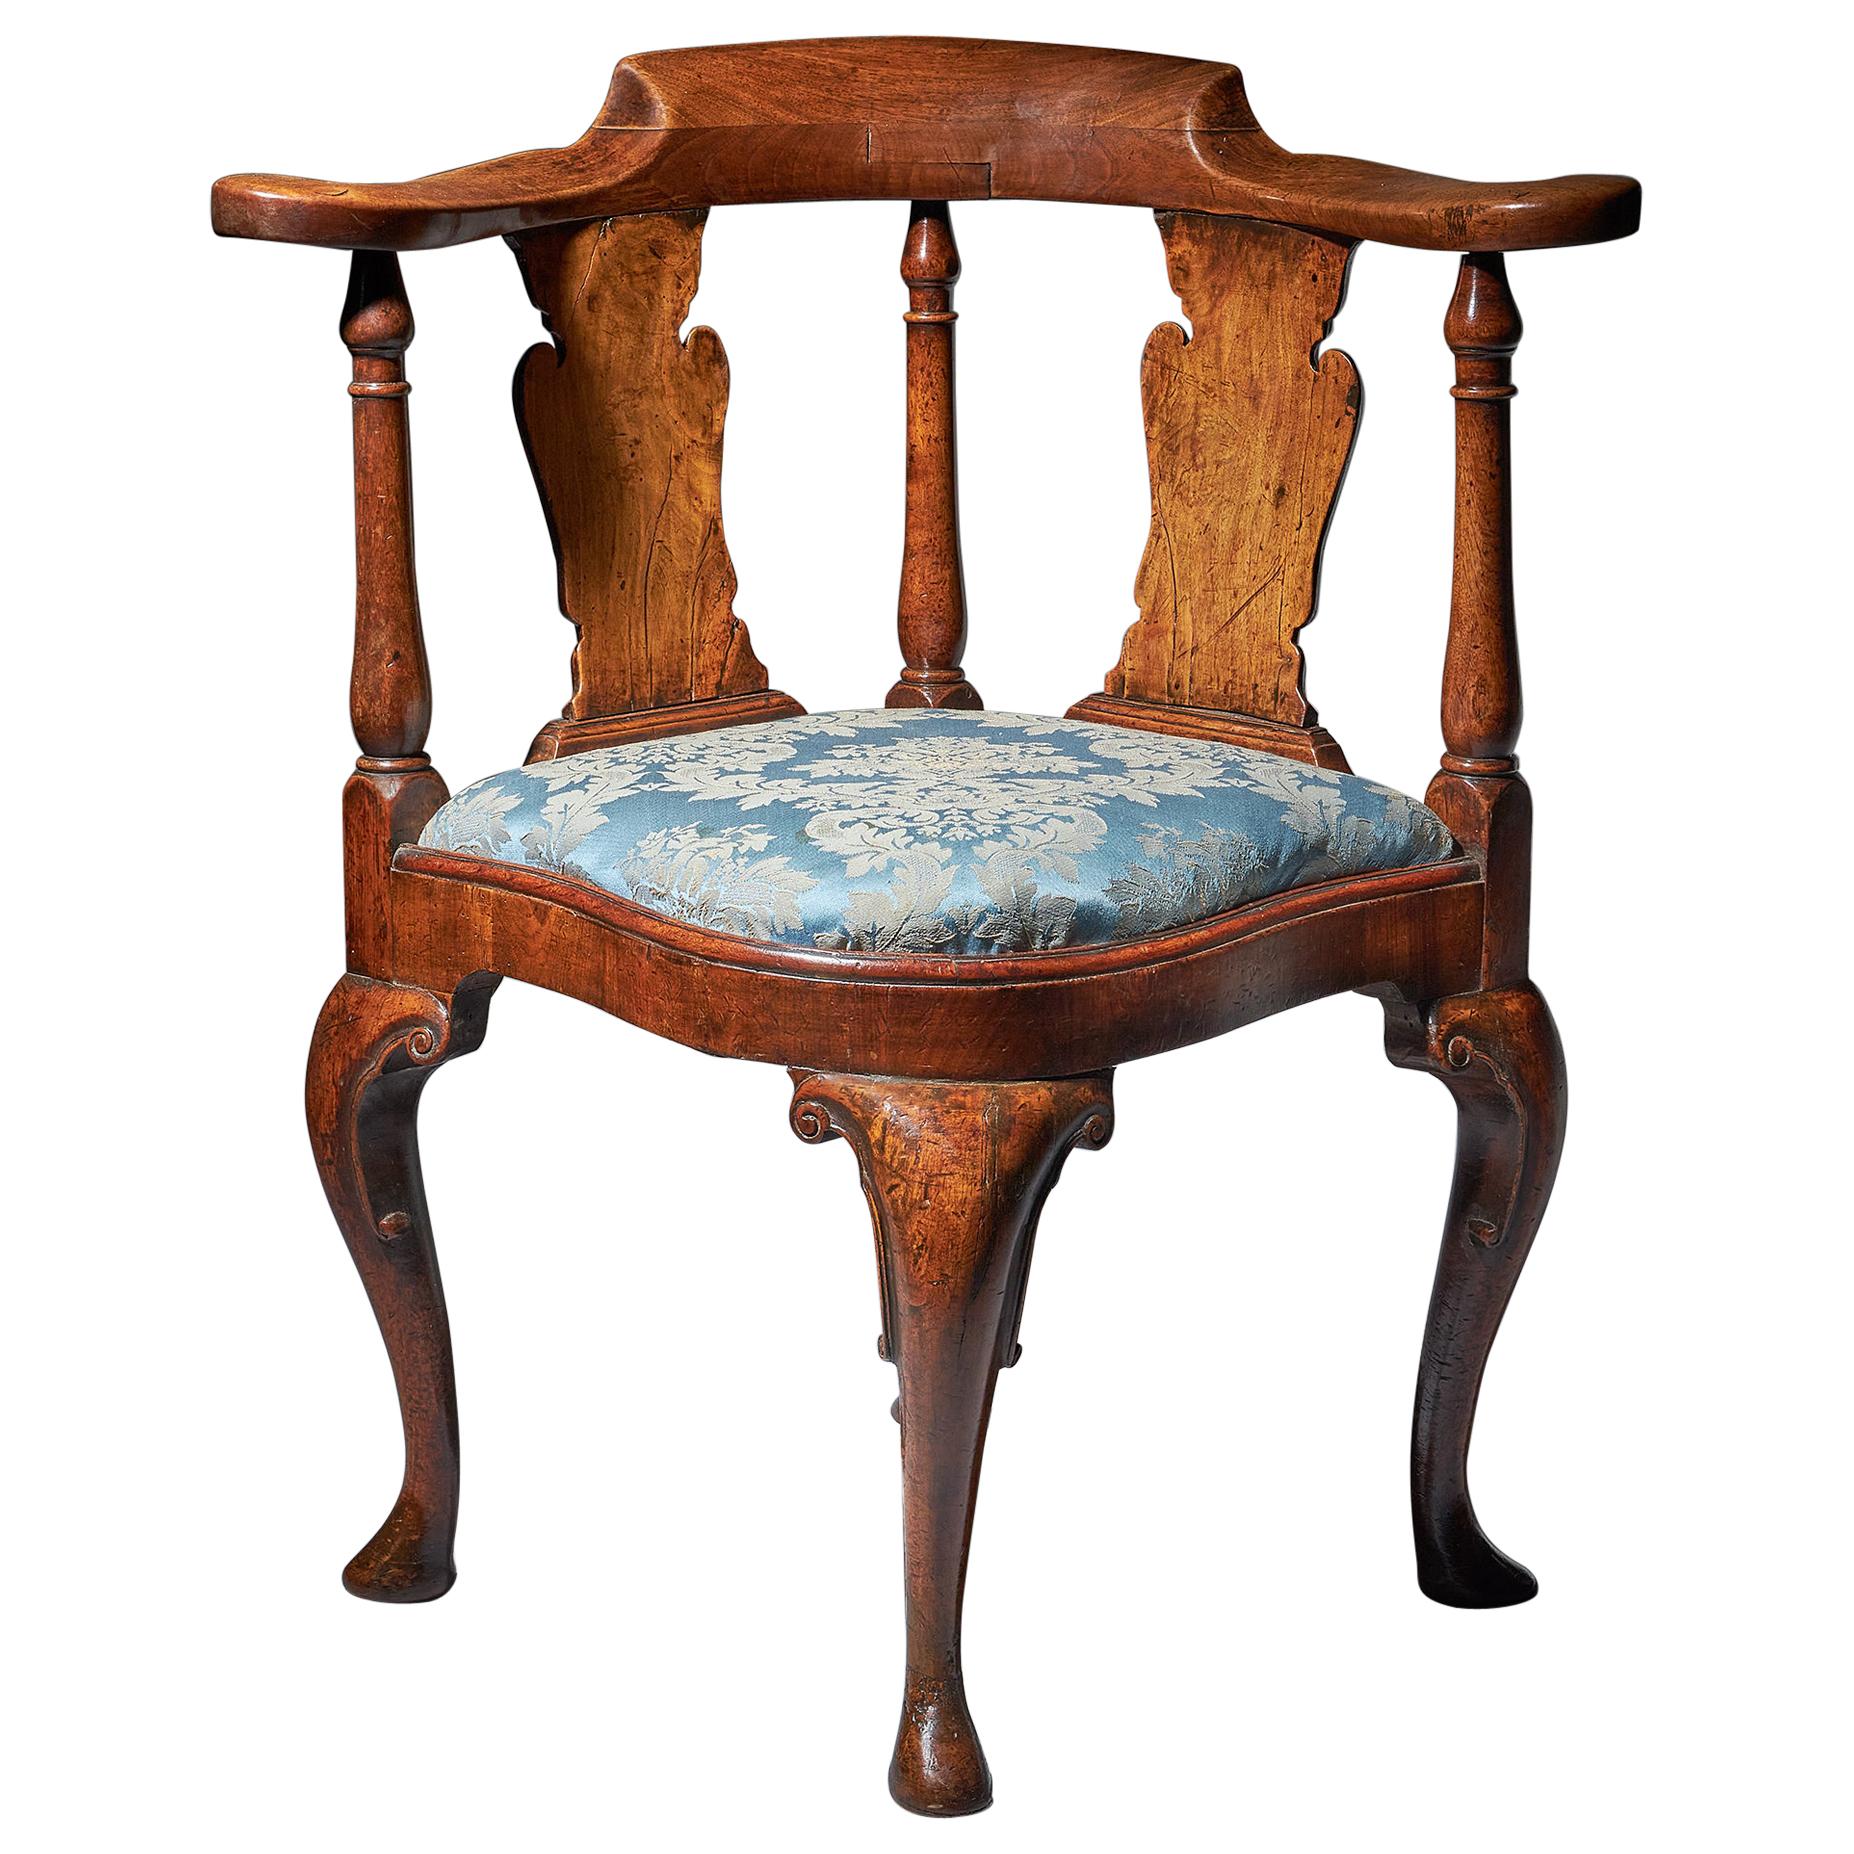 Queen Anne Period Walnut Corner Chair, Circa 1702-1714